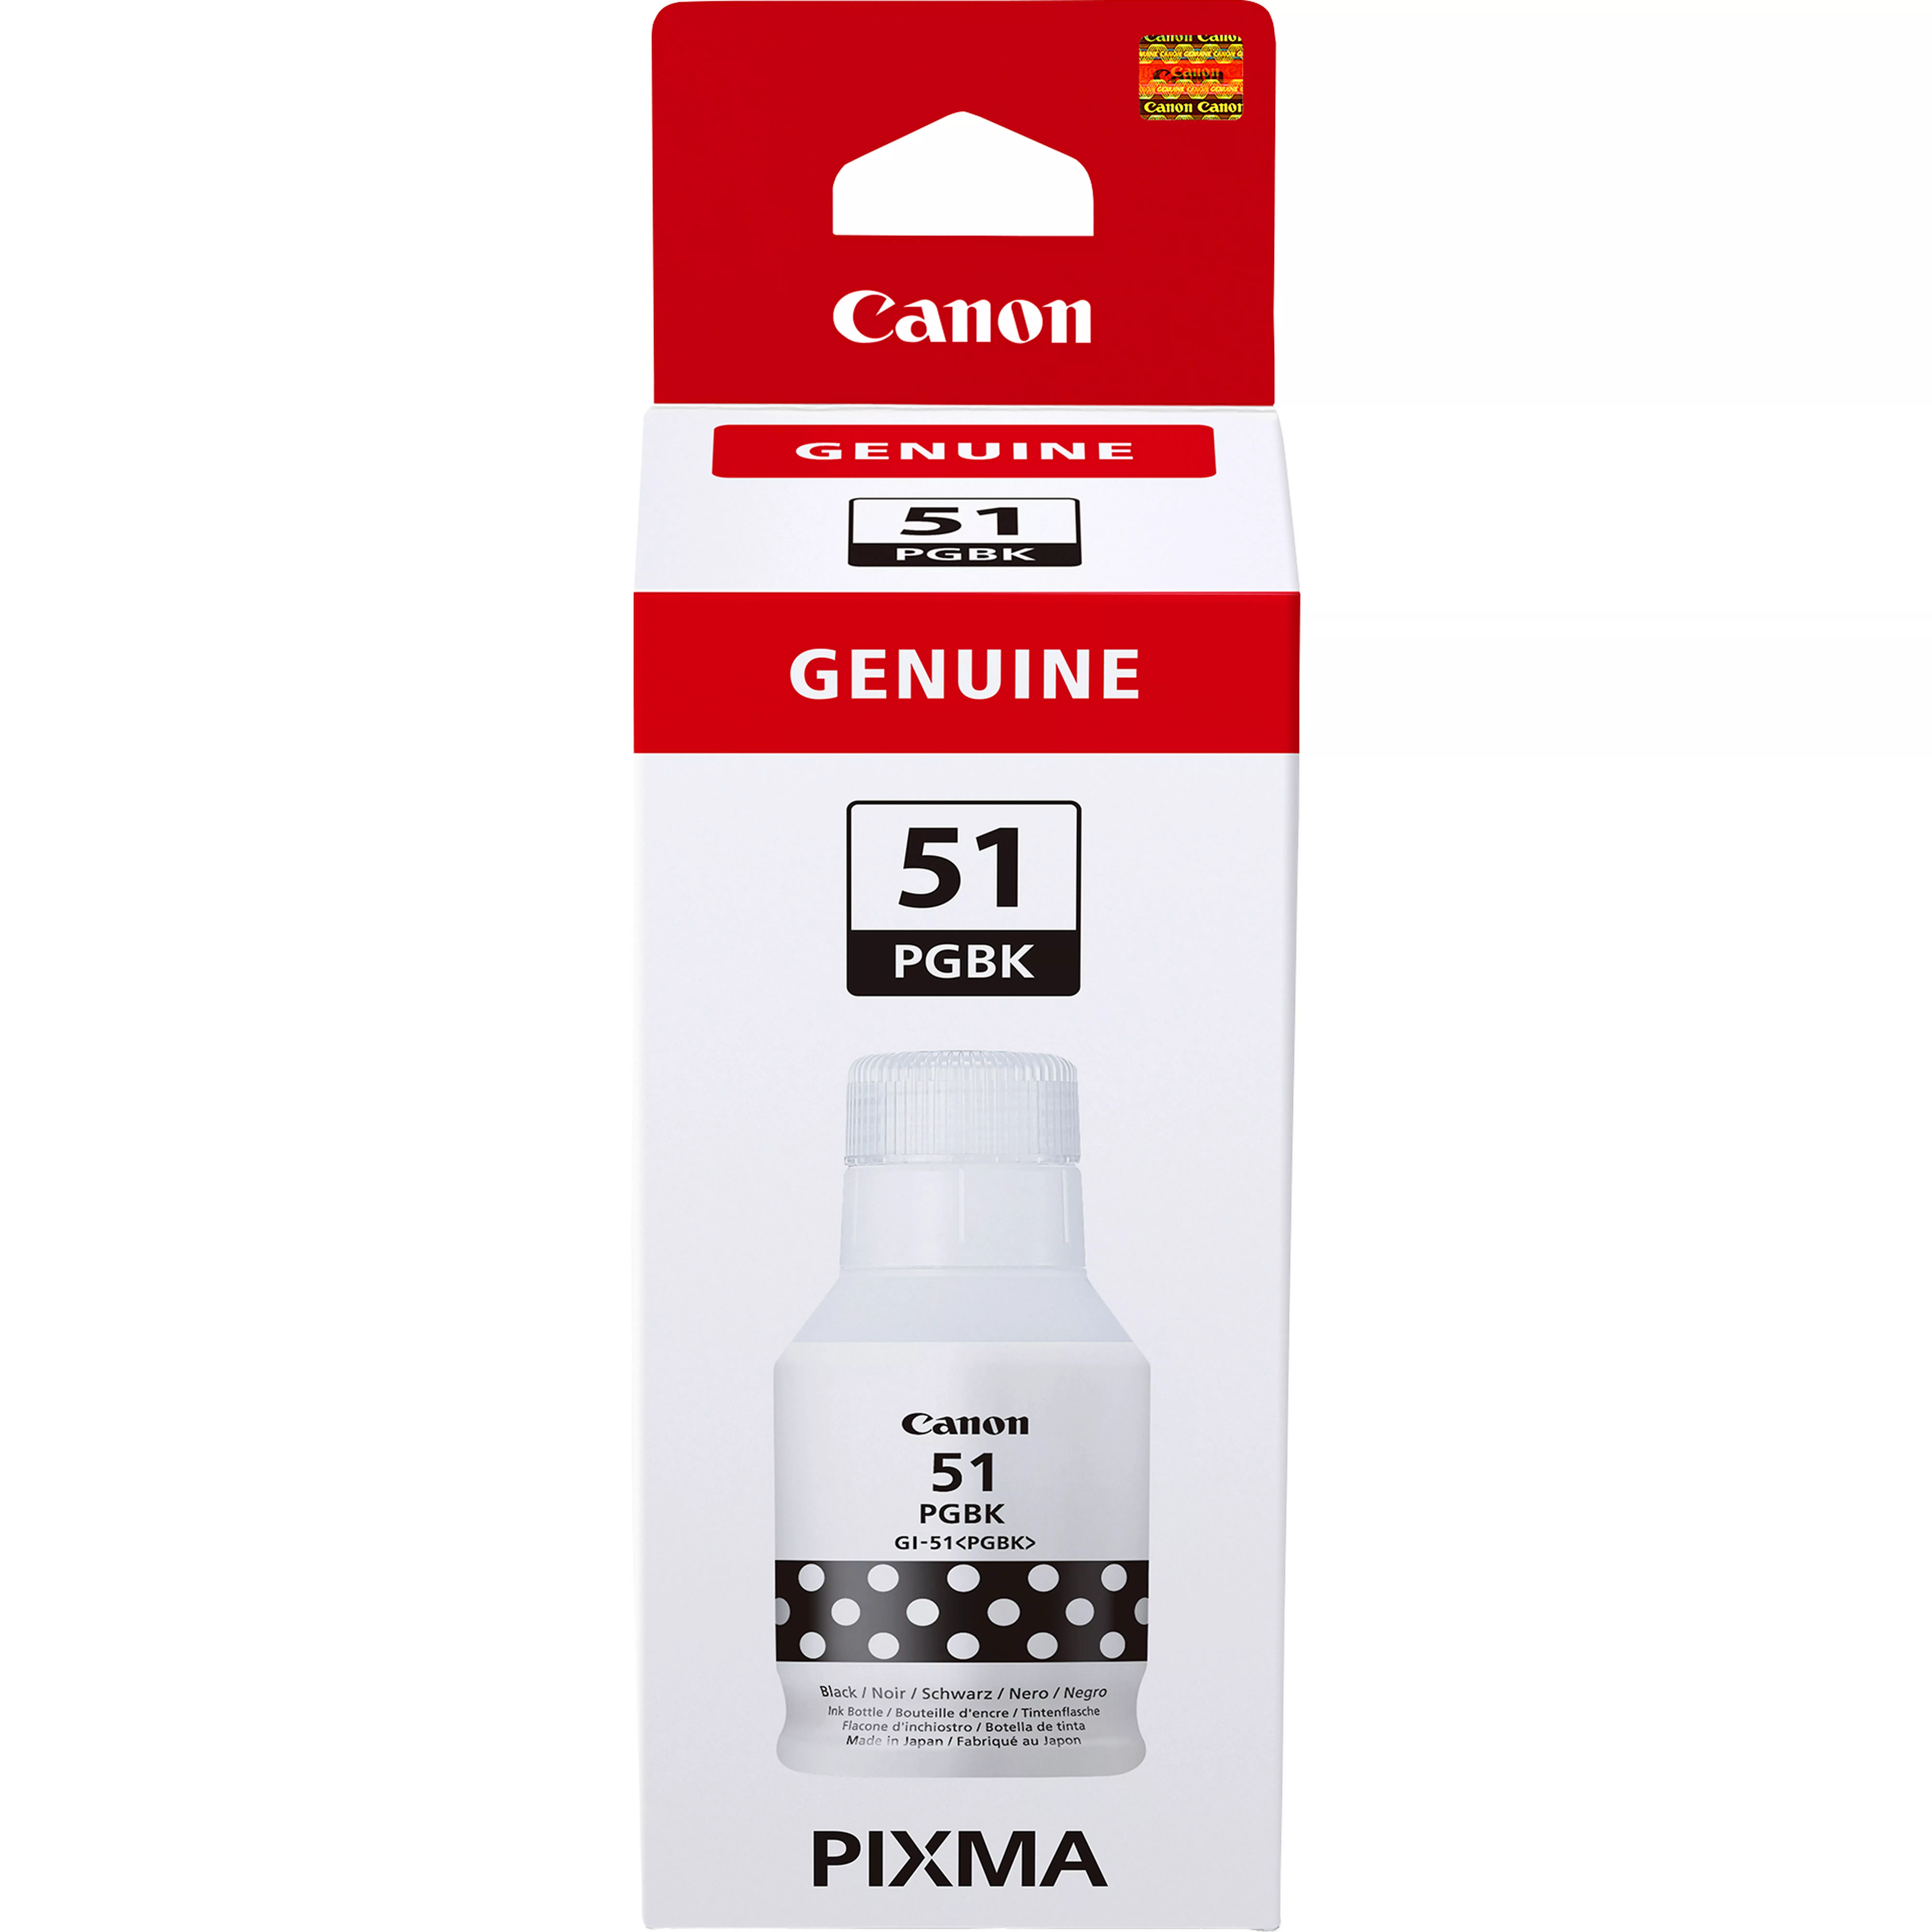 Vente CANON GI-51 PGBK EUR Ink Cartridge au meilleur prix